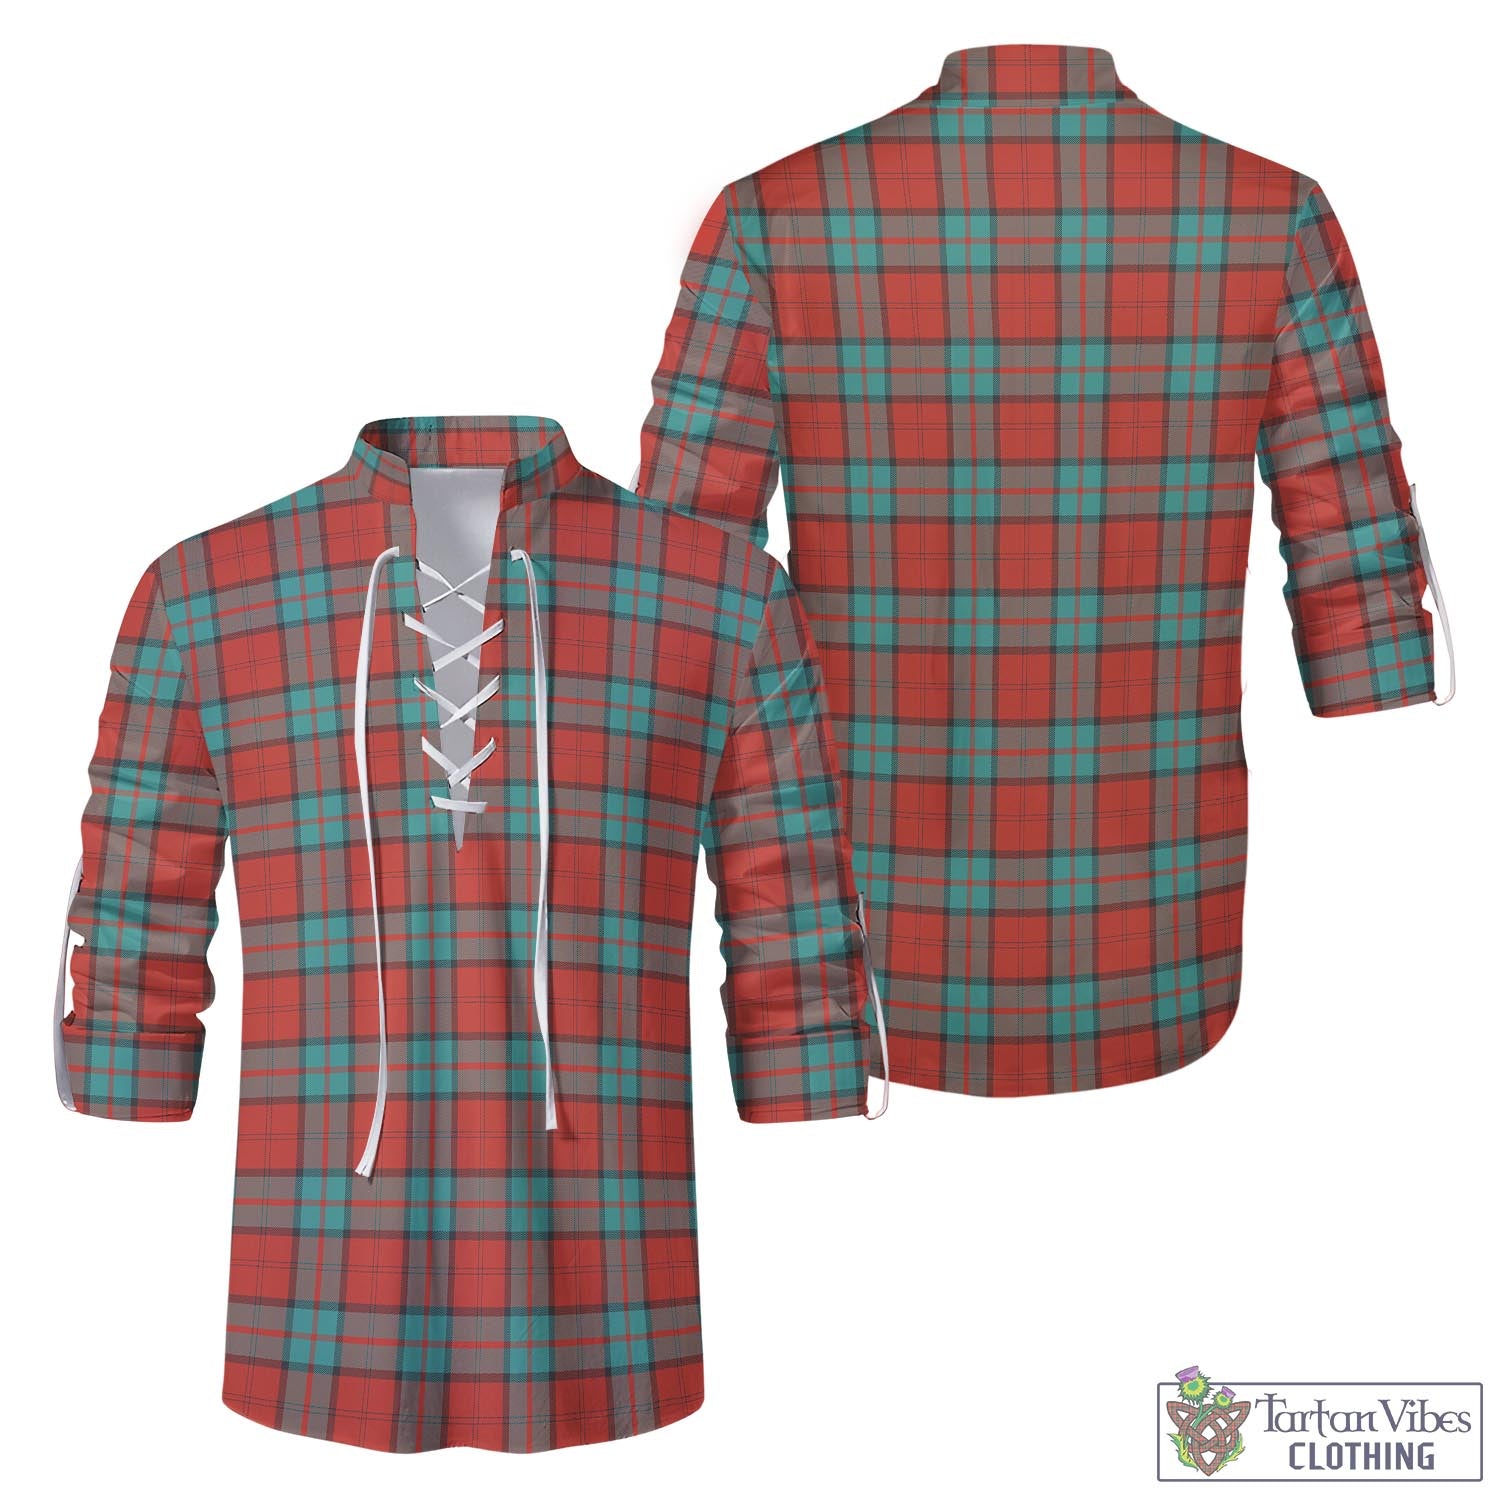 Tartan Vibes Clothing Dunbar Ancient Tartan Men's Scottish Traditional Jacobite Ghillie Kilt Shirt